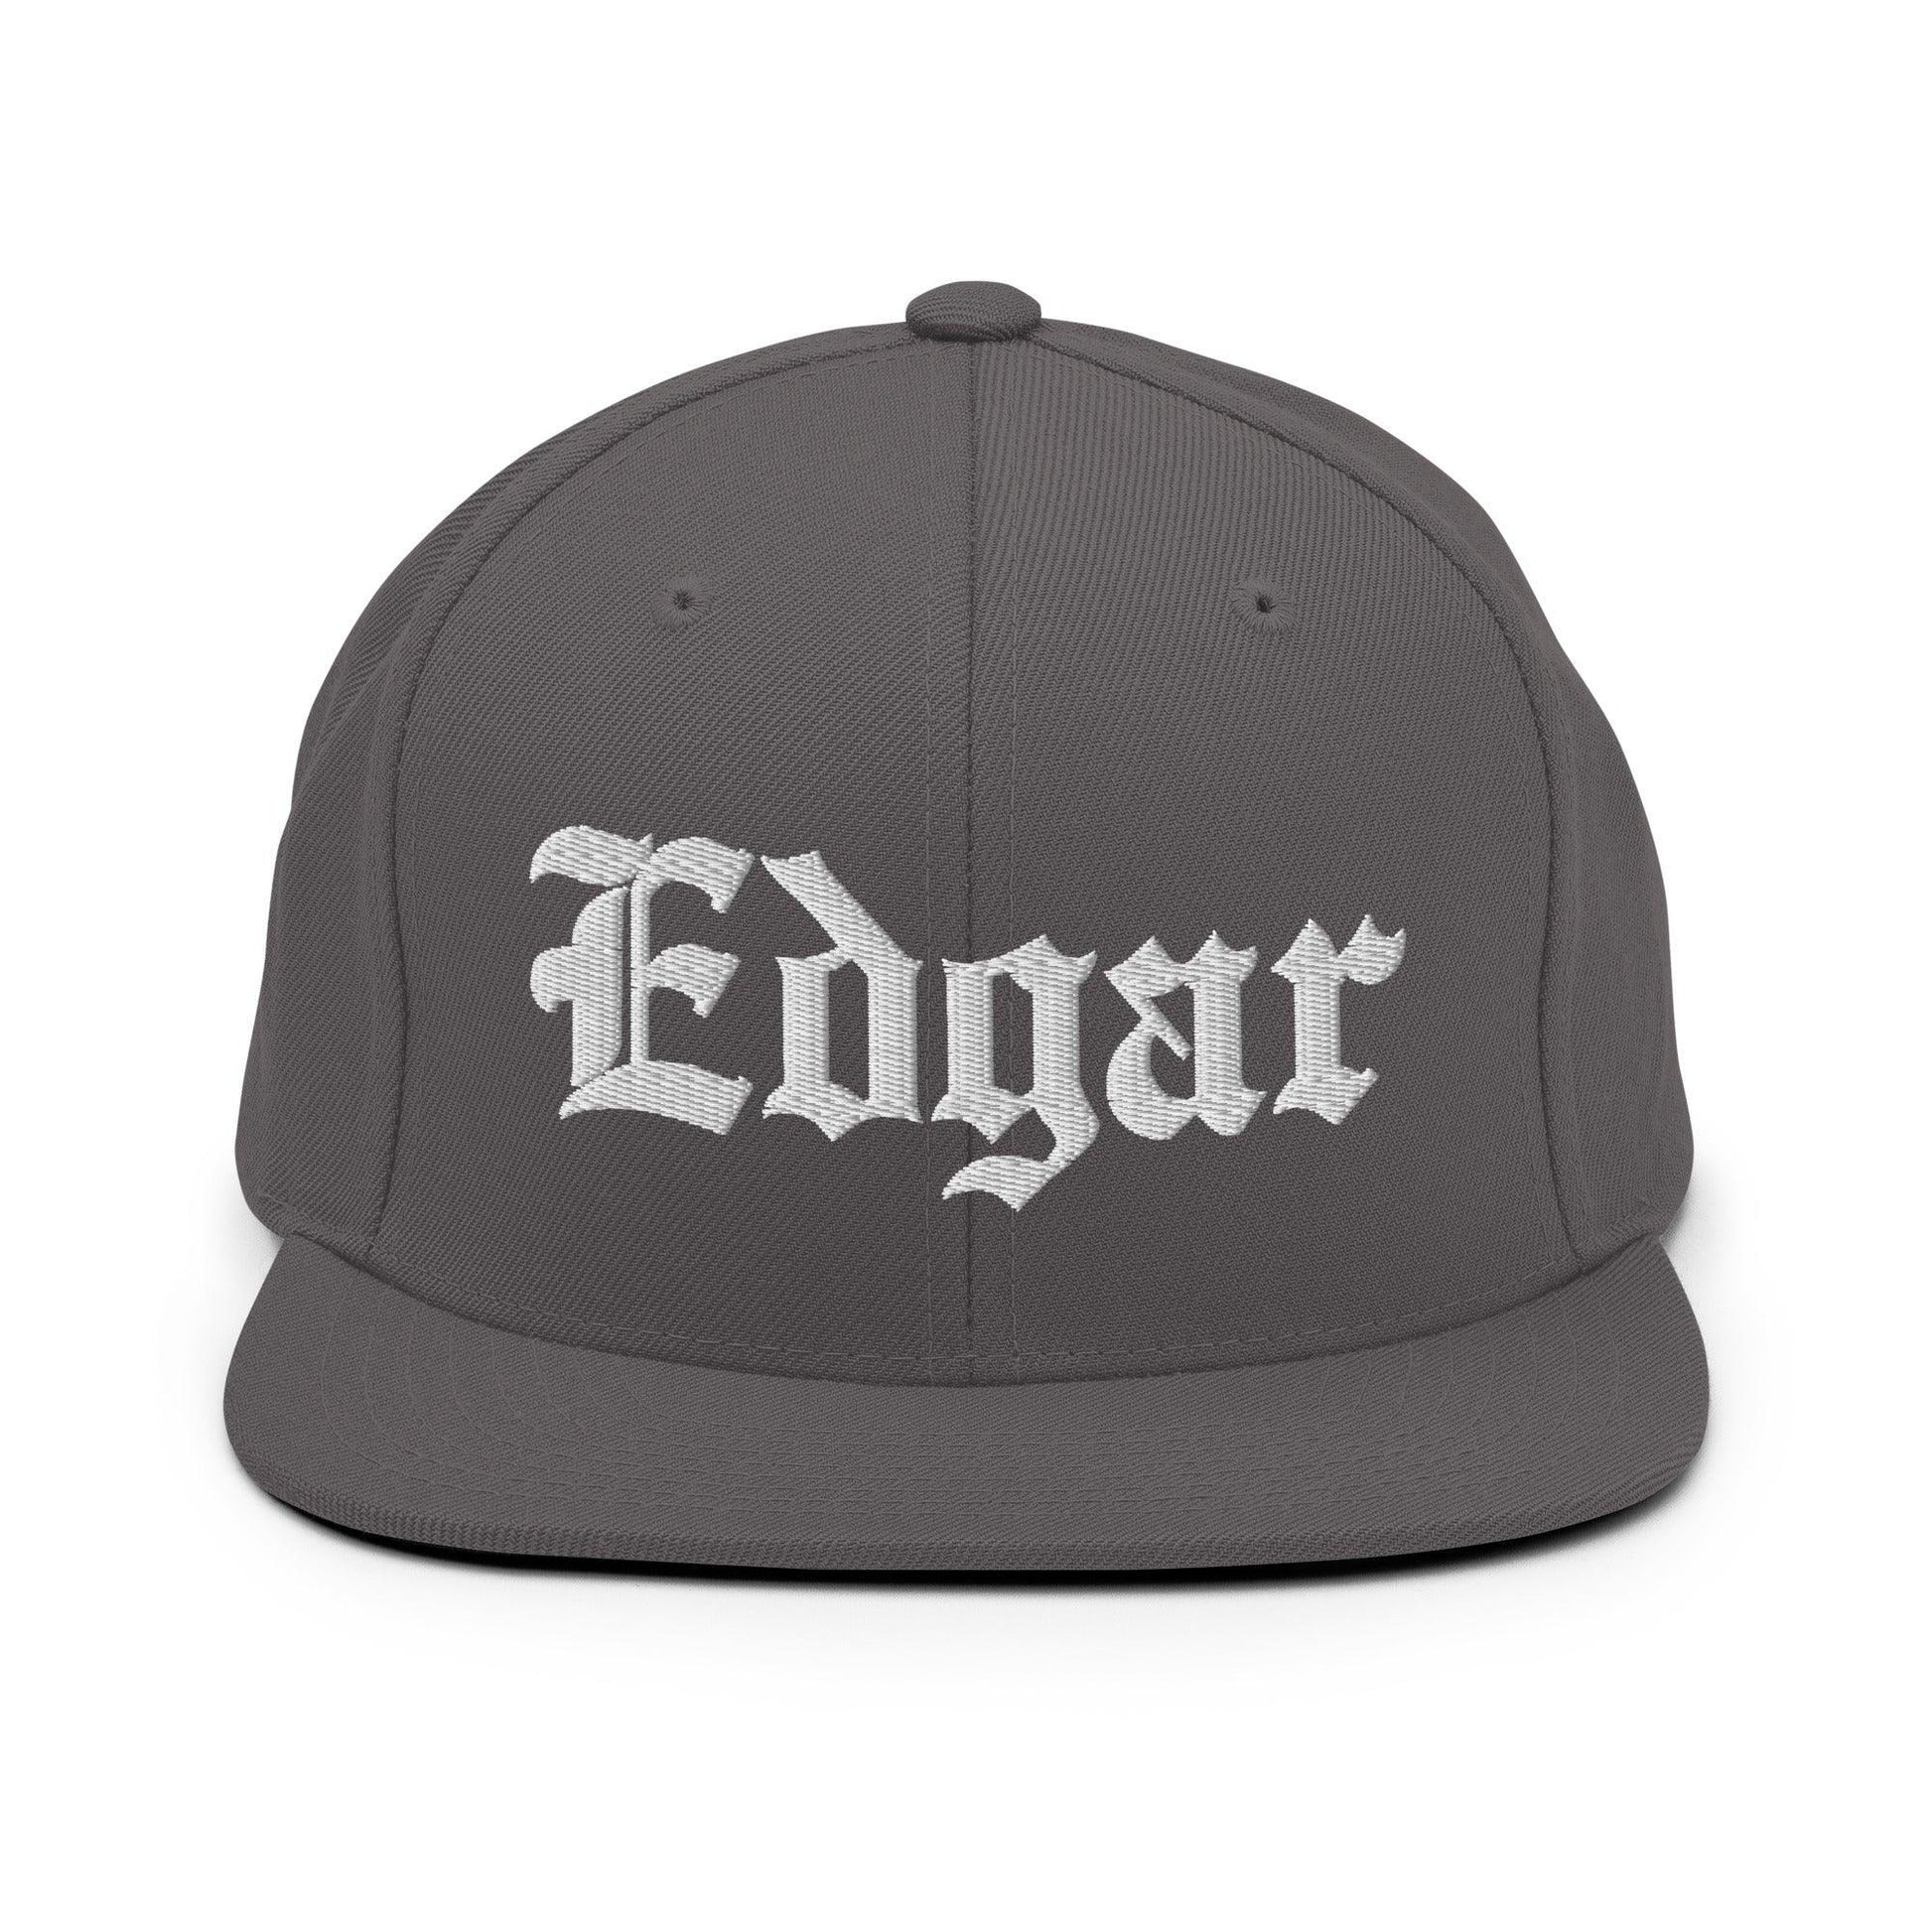 Edgar Old English Snapback Hat Dark Grey